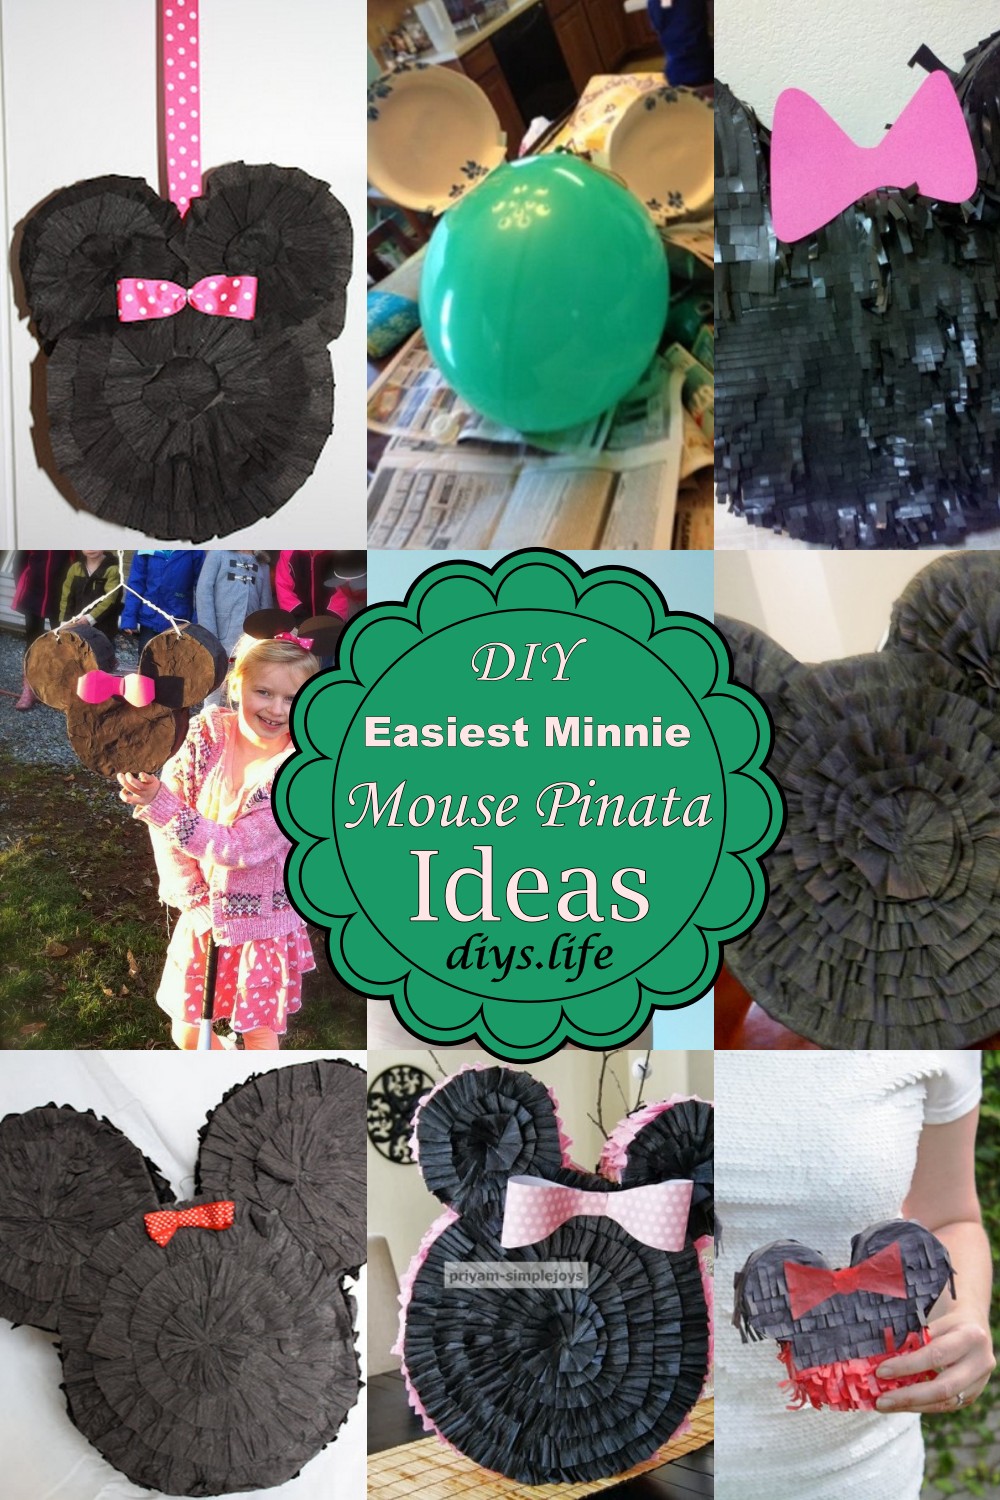 Easiest Minnie Mouse Pinata Ideas